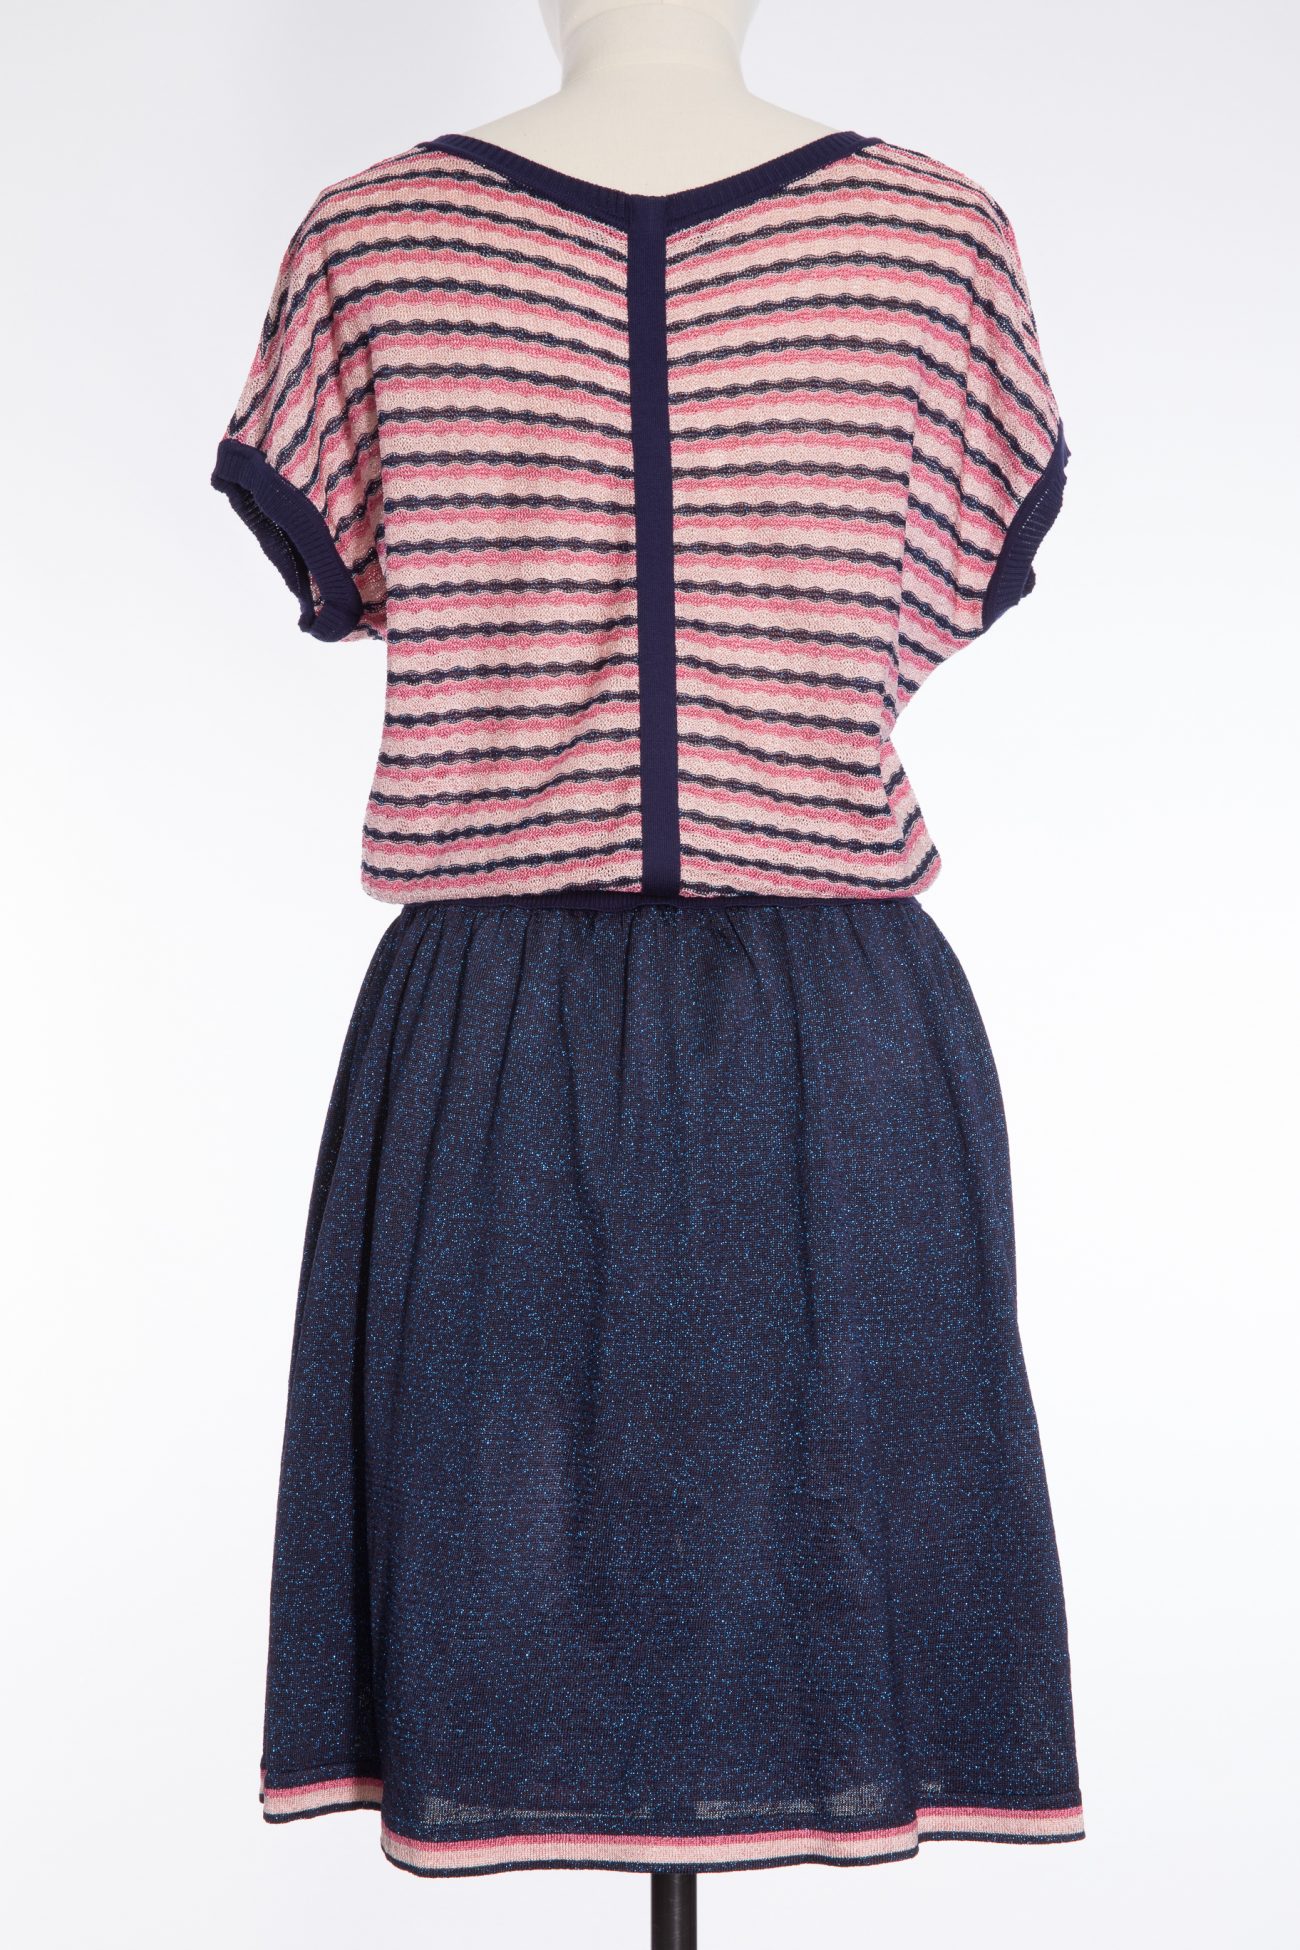 Trussardi jeans Midi dress with shiny thread